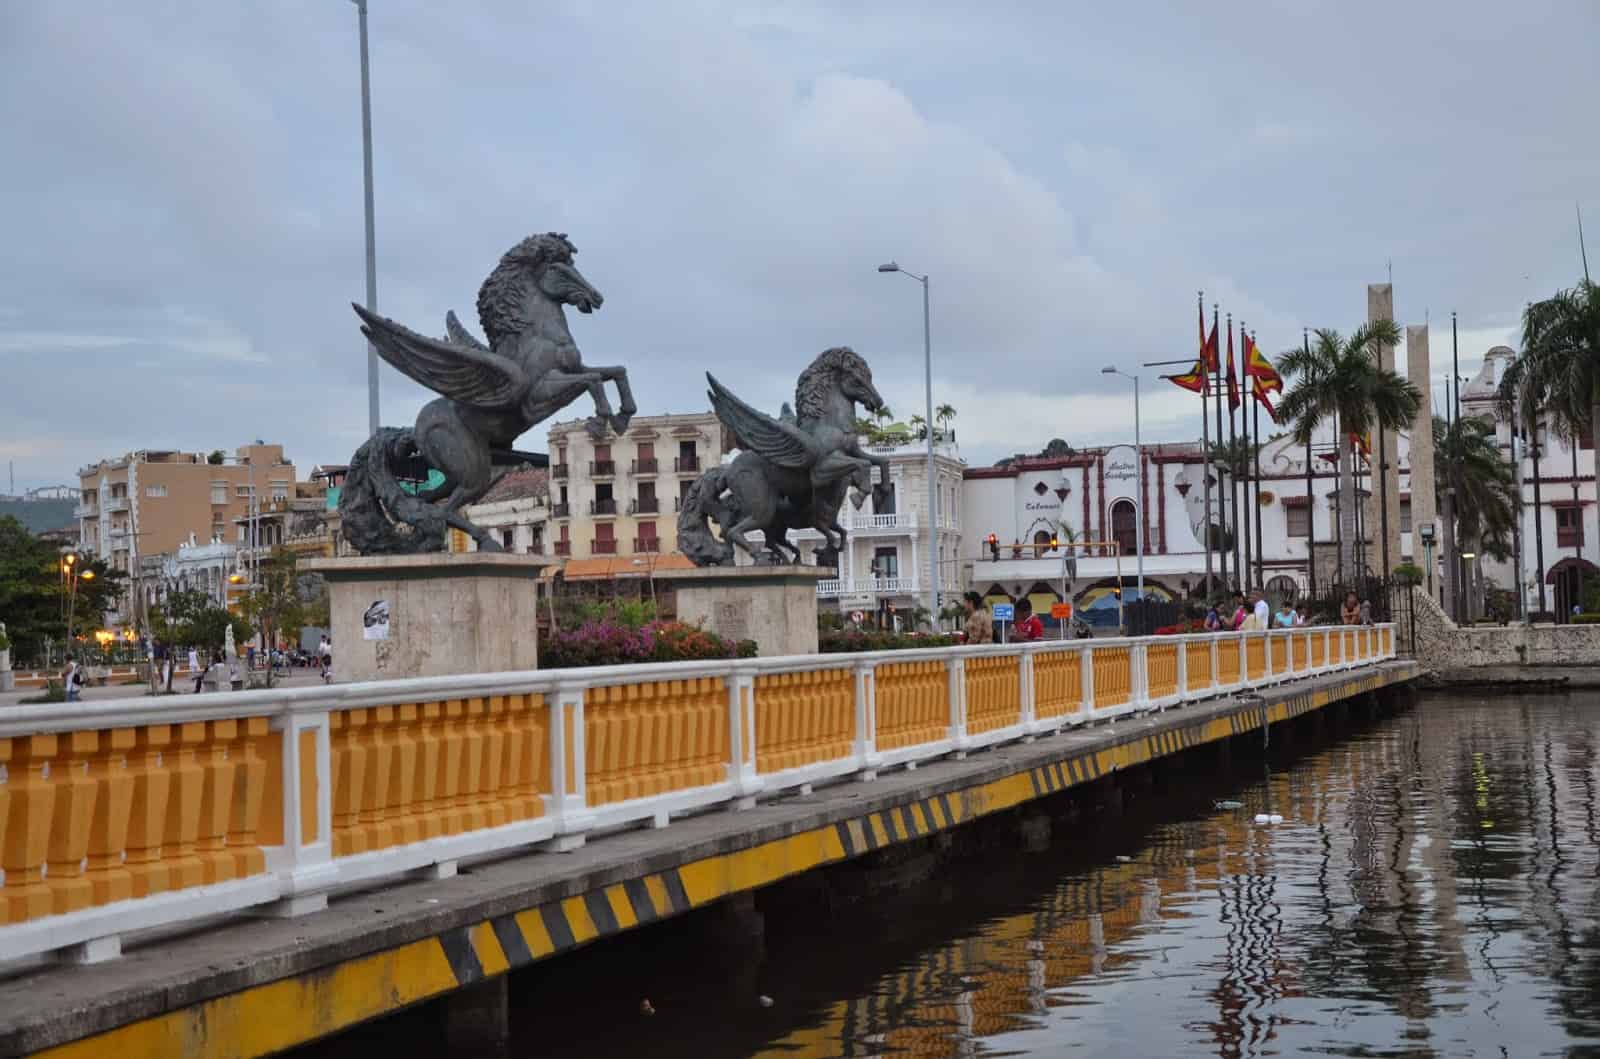 Pegasus Wharf in Cartagena, Colombia